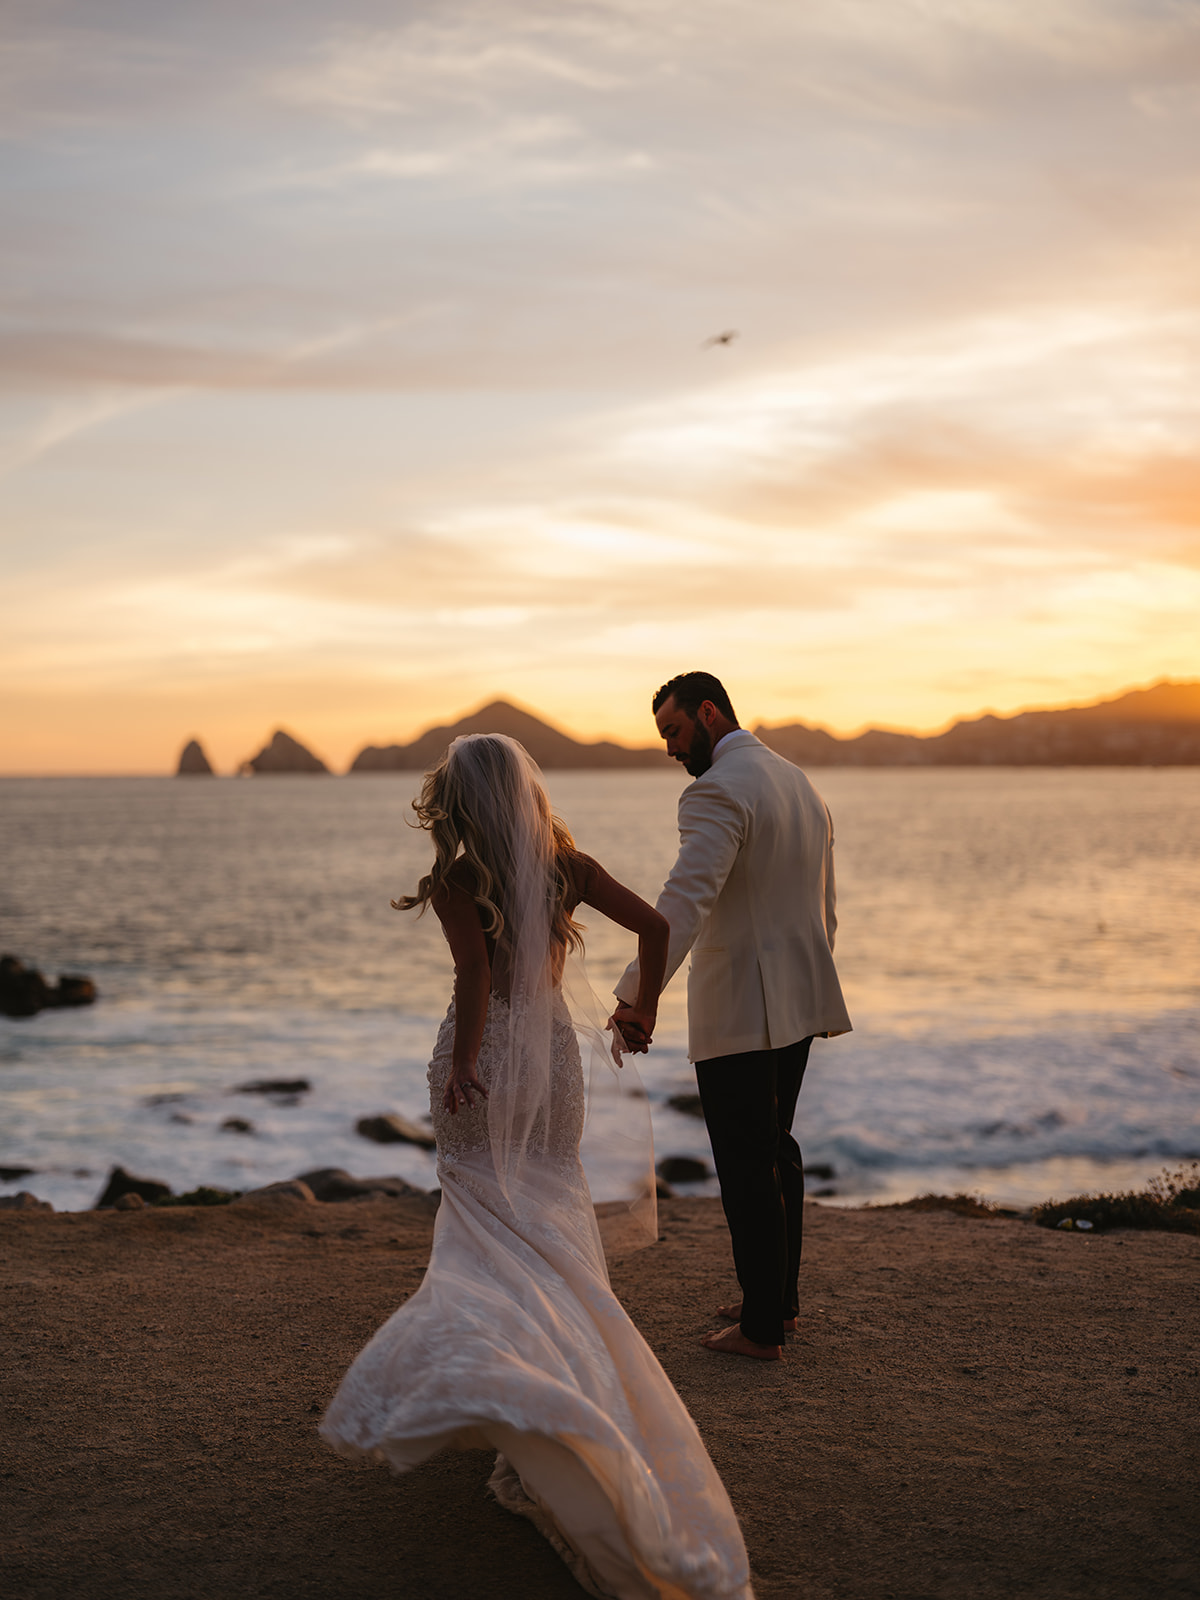 sunset wedding day photos from cabo san lucas